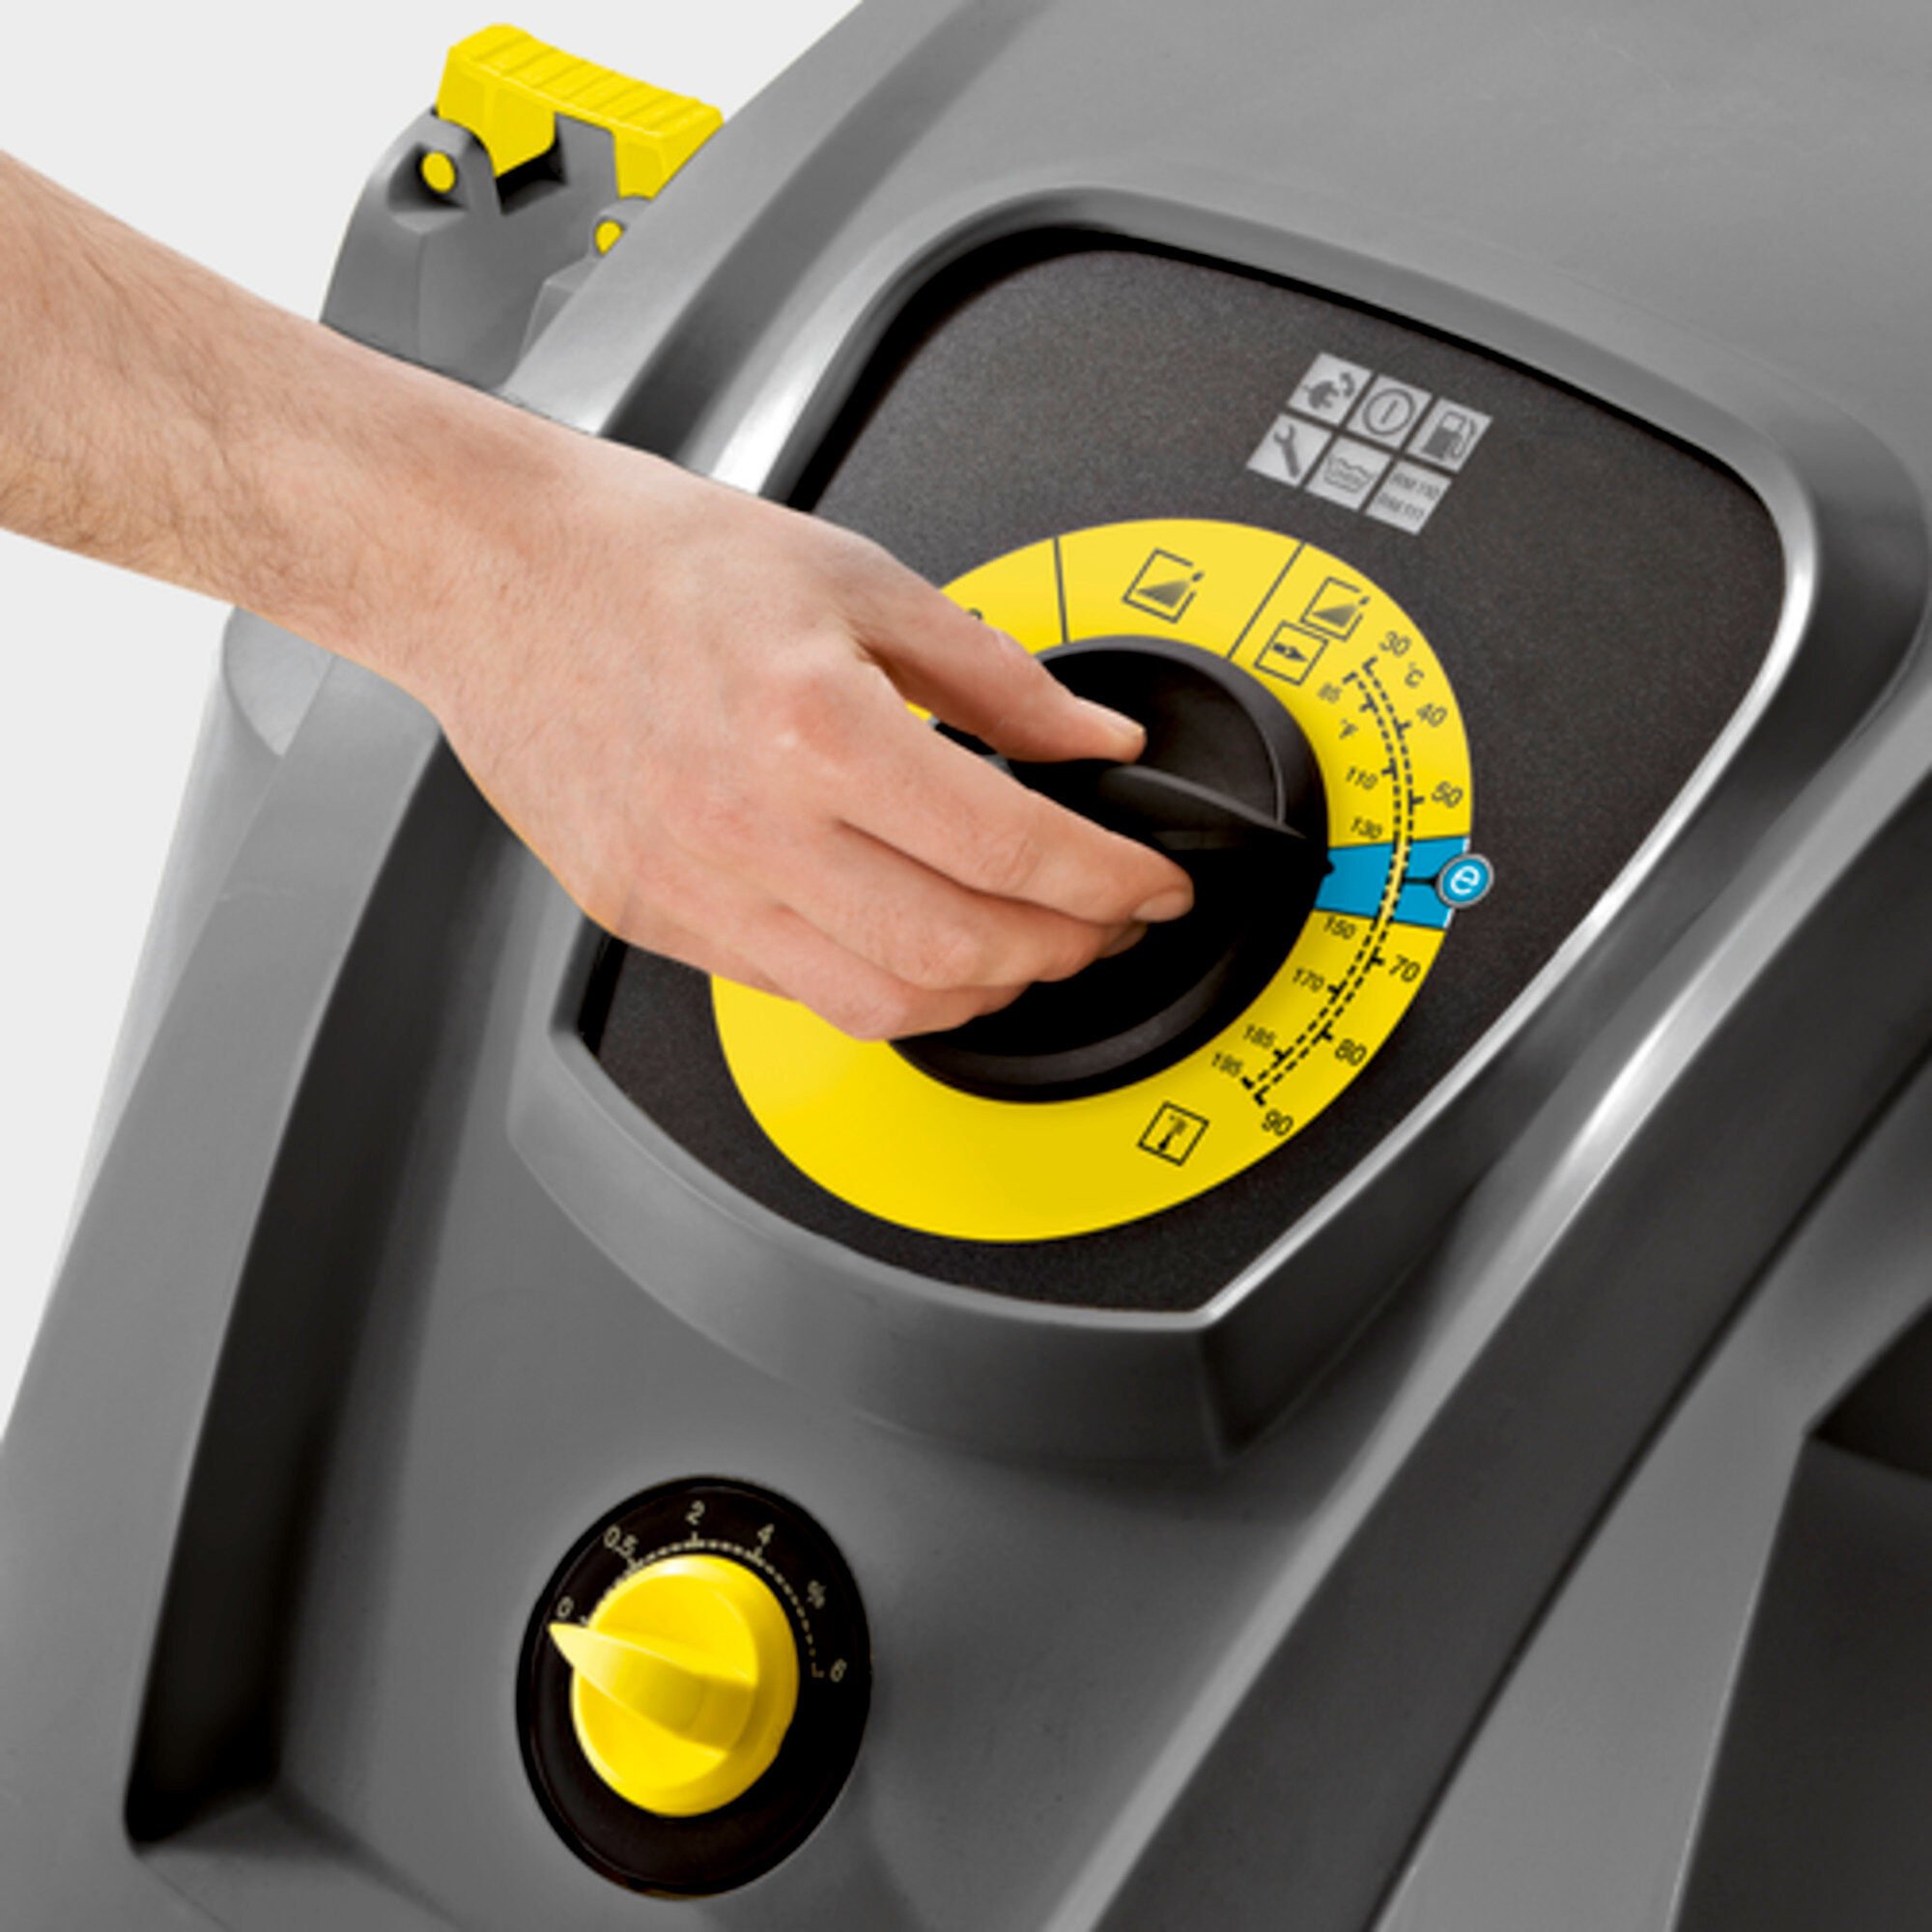 HDS 4/7 C （60Hz） 温水 コンパクトクラス高圧洗浄機 | ケルヒャー